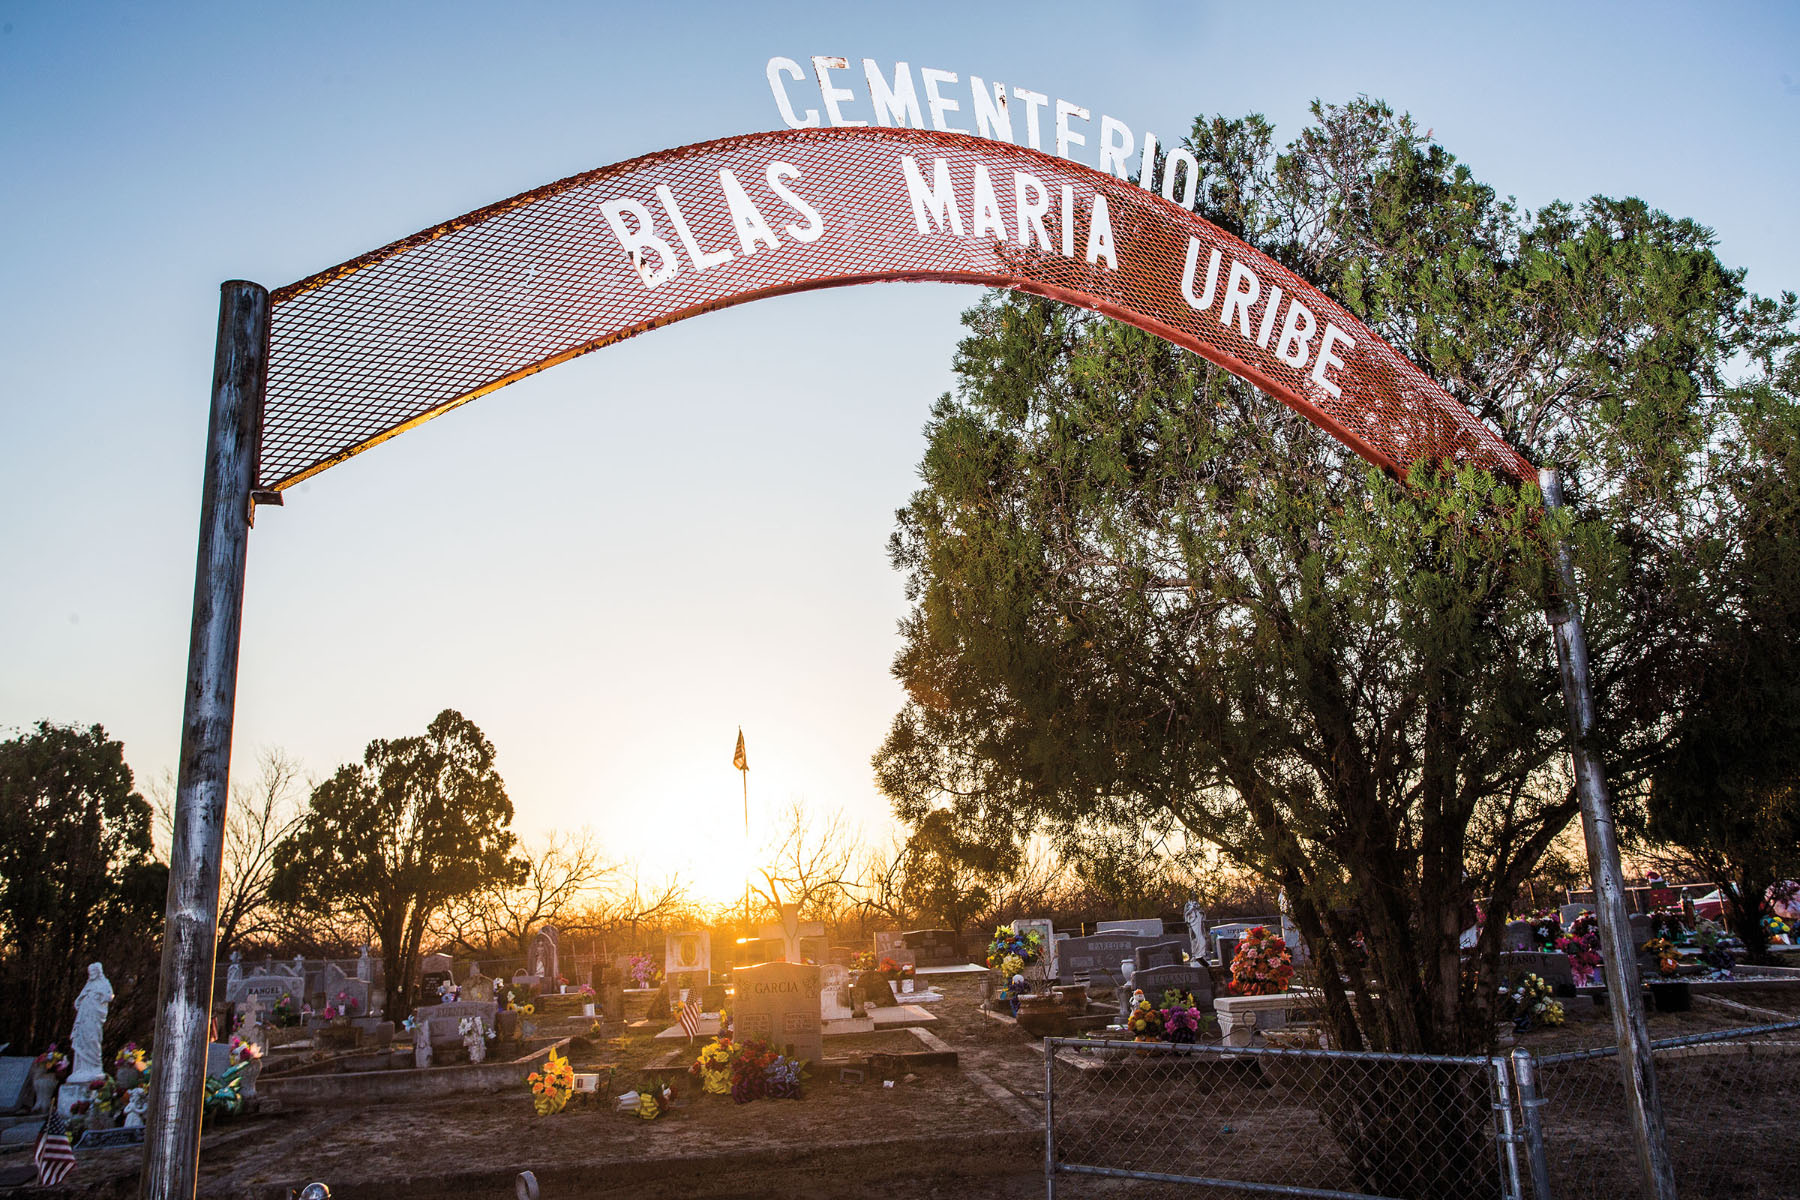 A red metal archway rading "Cemeterio Blas Maria Uribe"